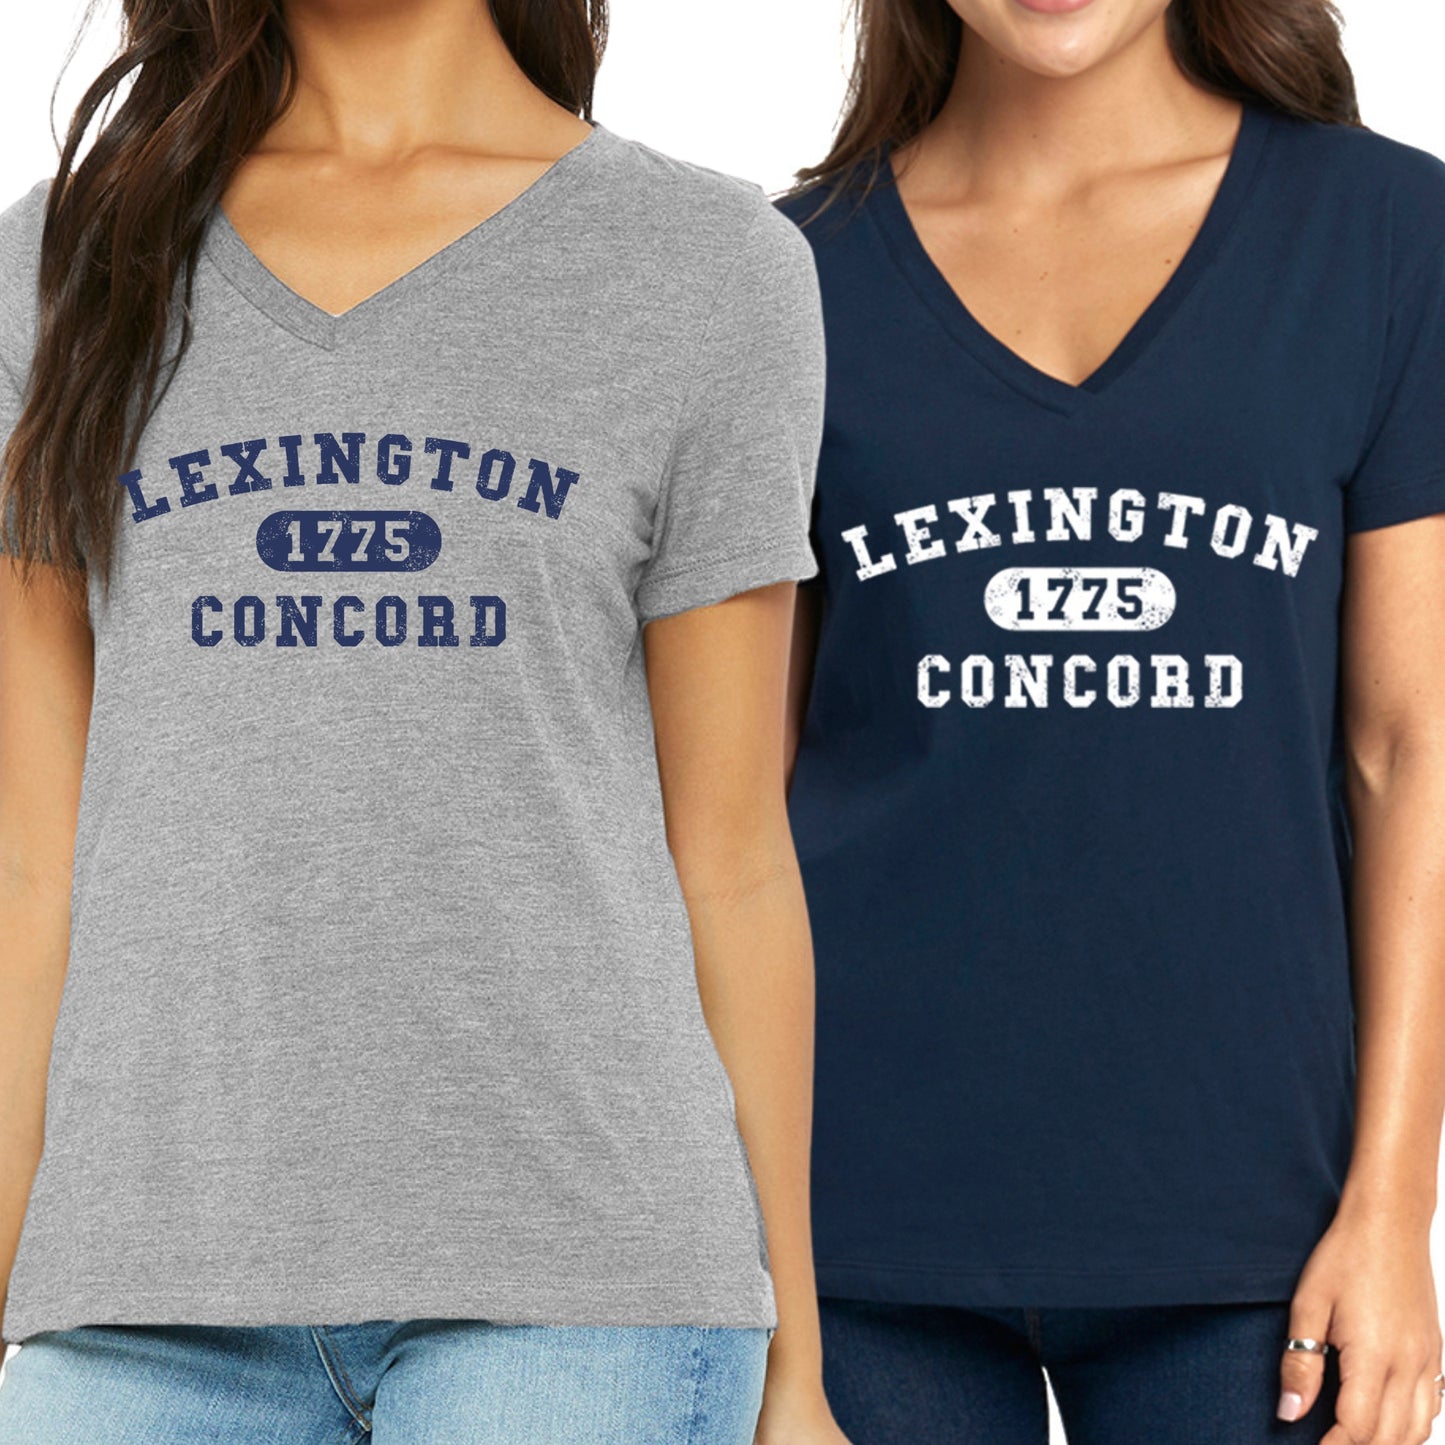 1775 Lexington and Concord Women's v-neck shirt